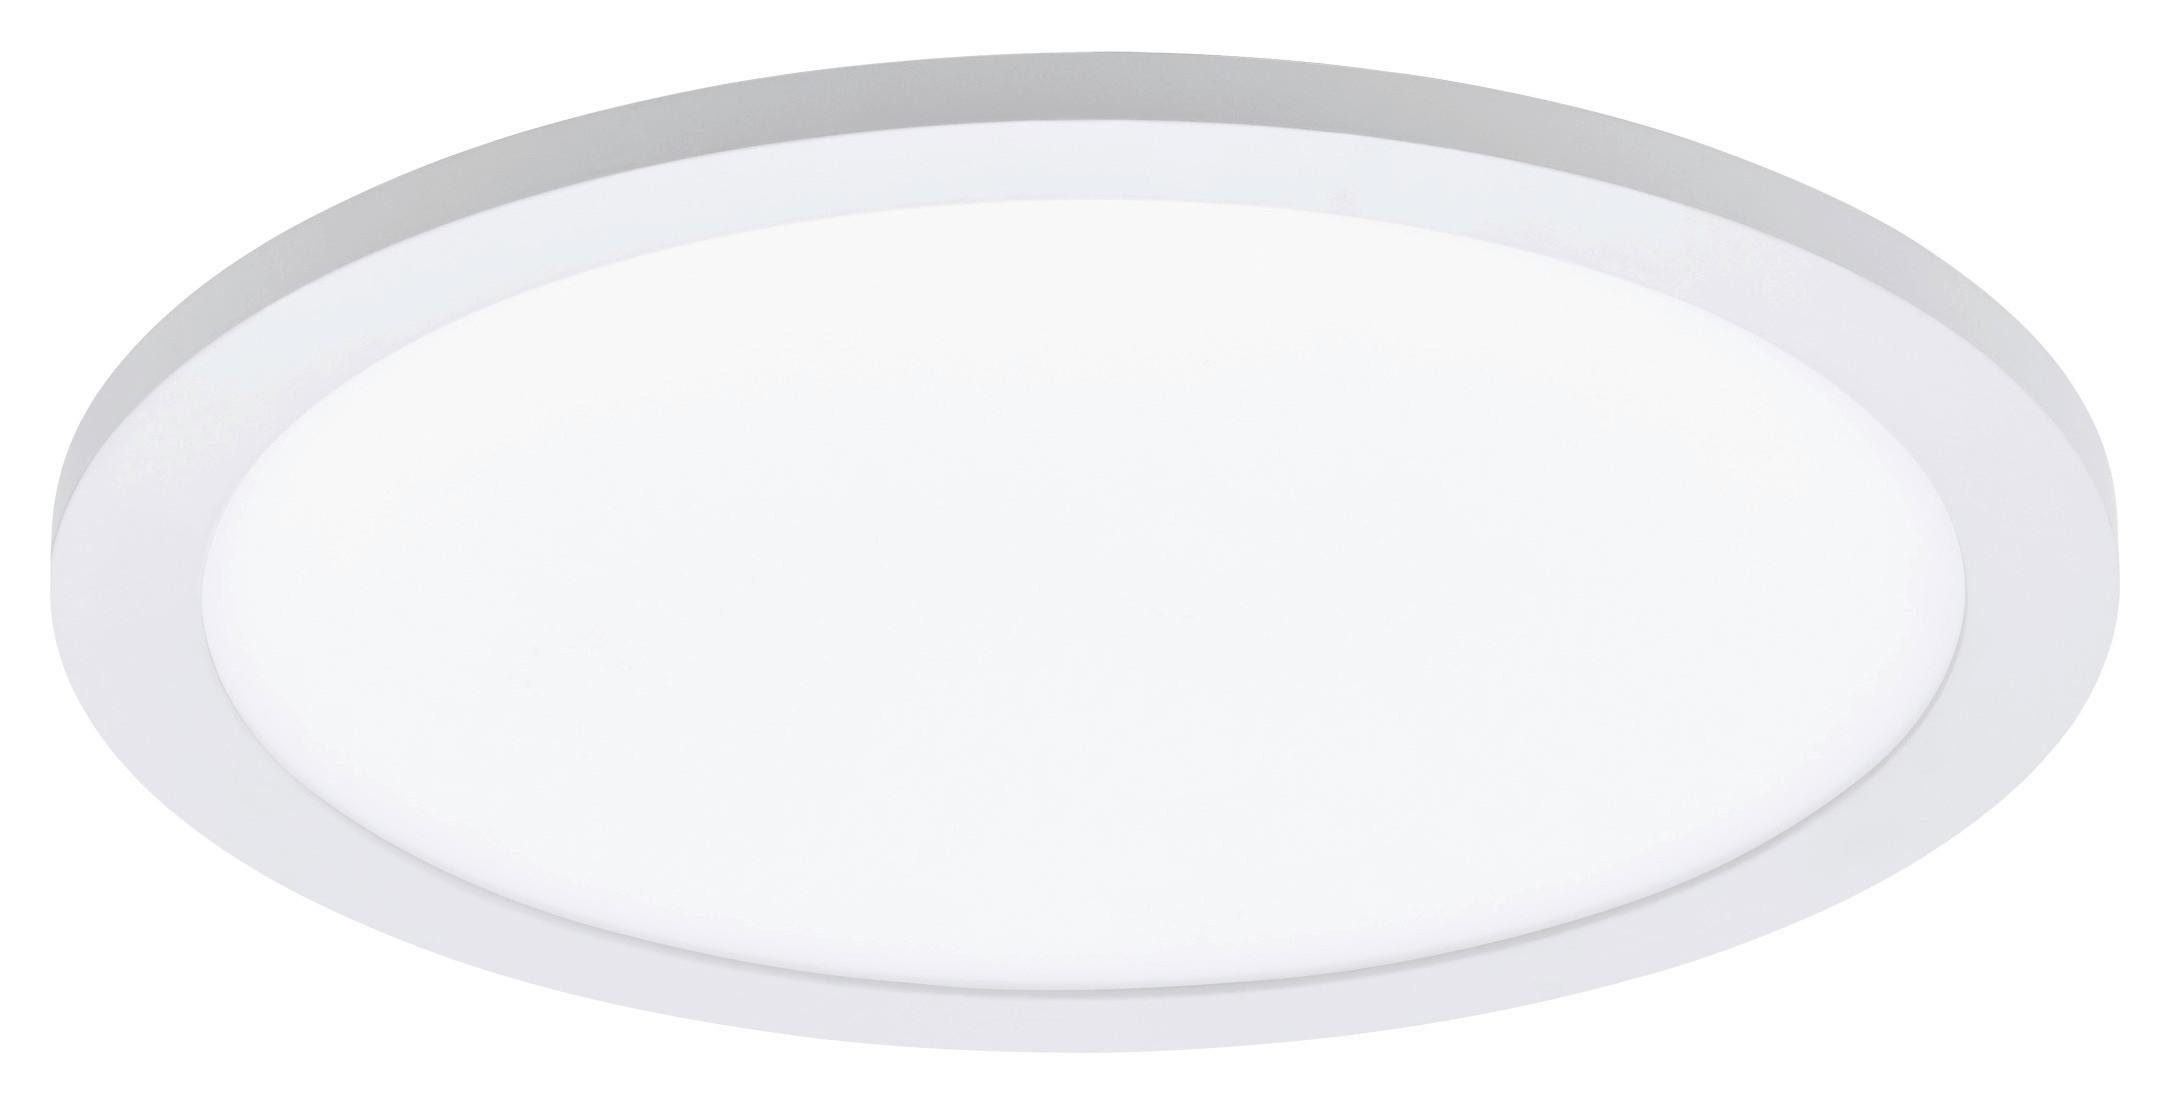 LED-Paneel Sarsina Ø 30 cm dimmbar - Weiß, MODERN, Kunststoff/Metall (30/5cm) - Eglo